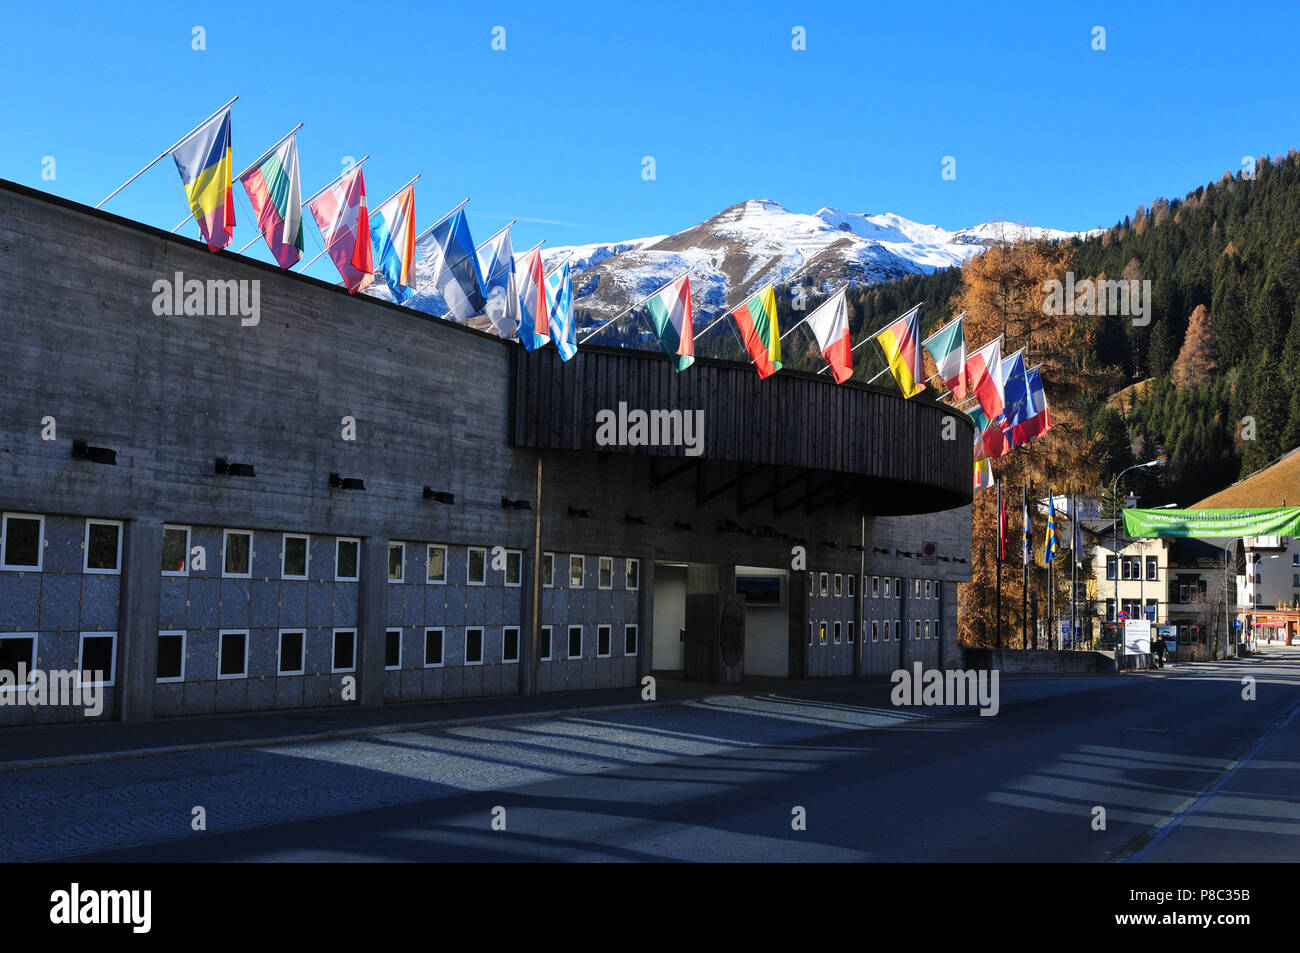 The Davos Congress Center Where The World Economic Forum Takes Place P8C35B 